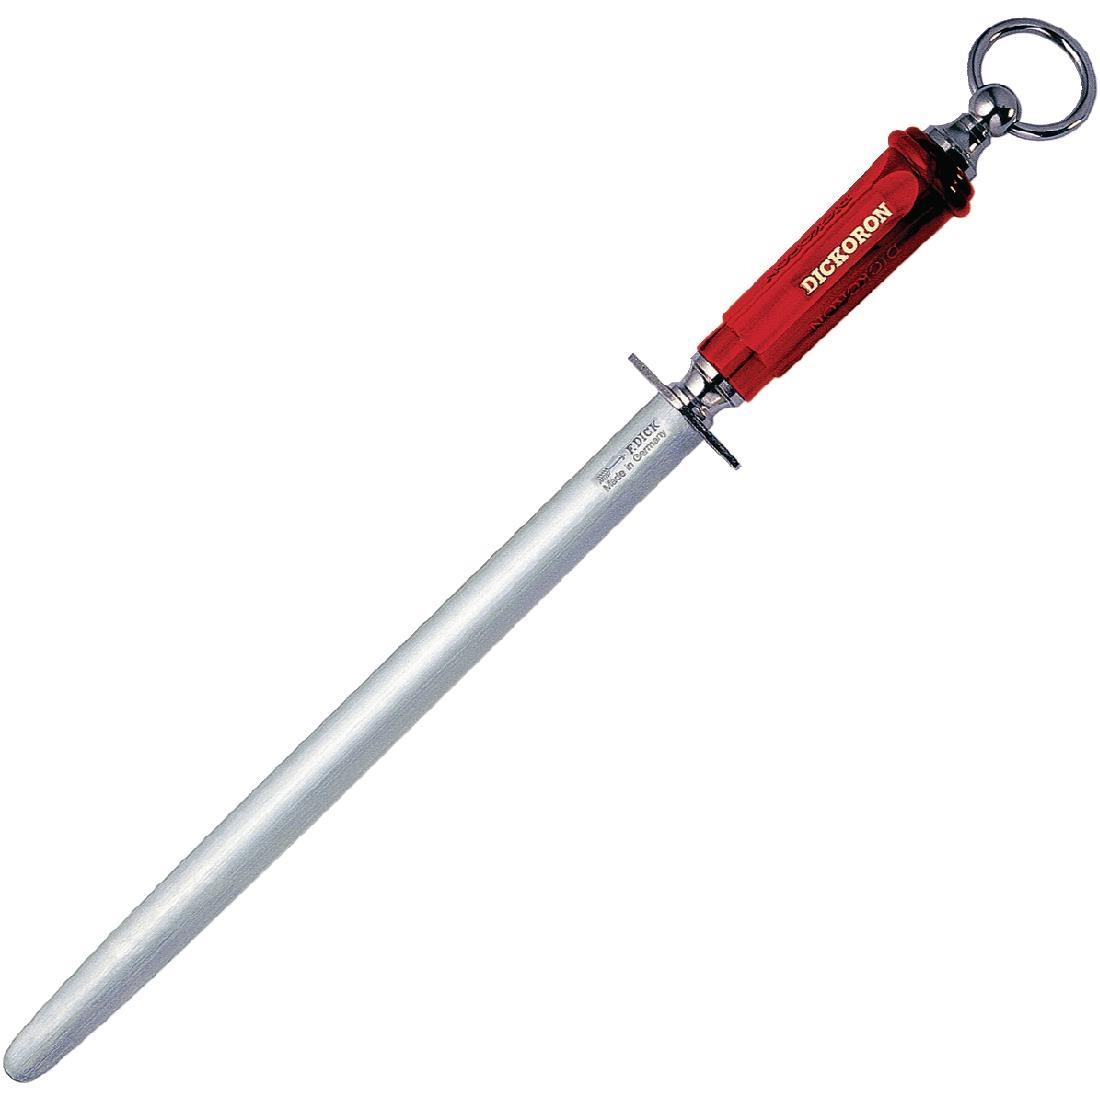 Dick Red Knife Sharpening Steel 30.5cm - DL335  - 1